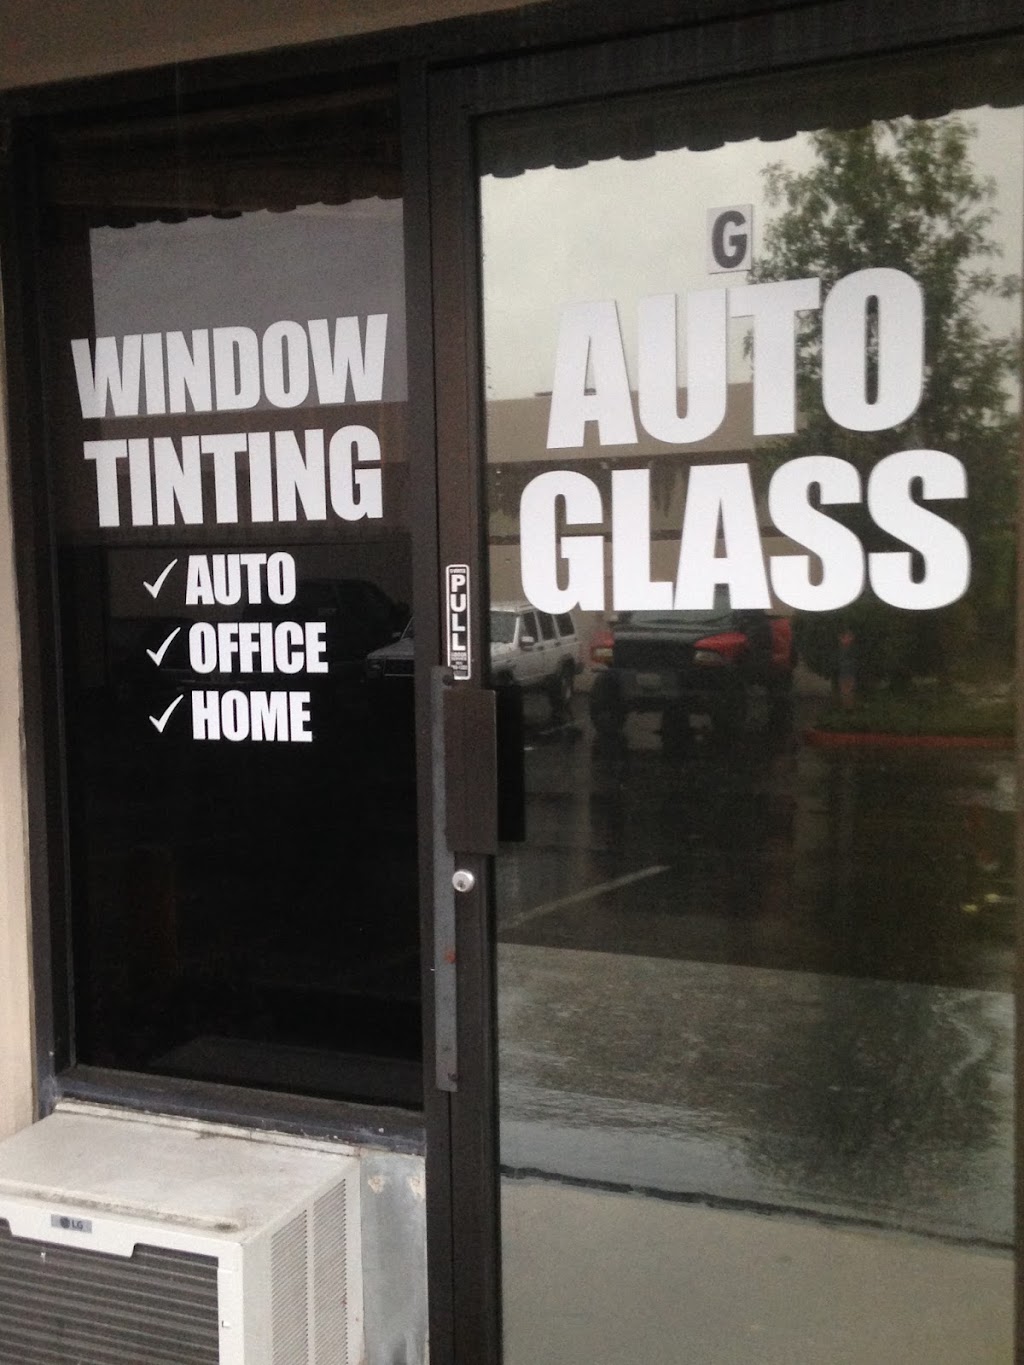 Auto glass and chip repair | 2314 S Vineyard Ave G, Ontario, CA 91761 | Phone: (909) 994-9397